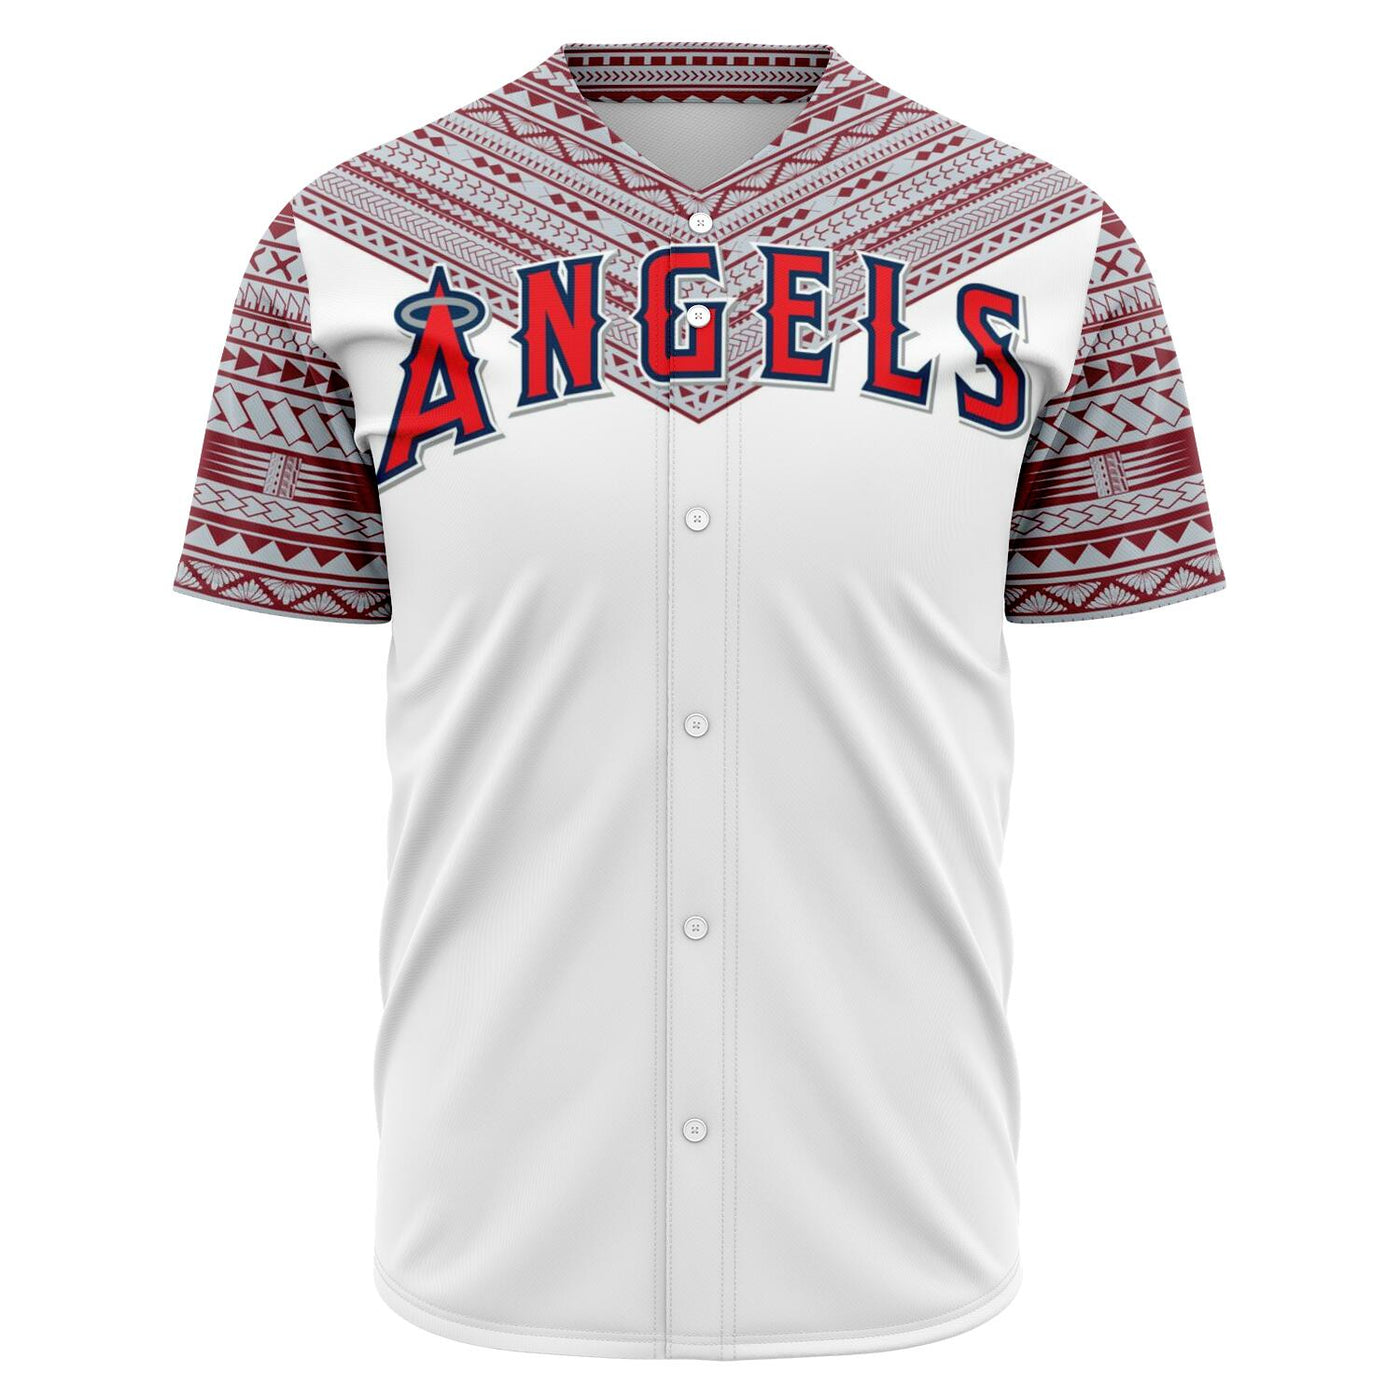 Los Angeles Angels Jerseys